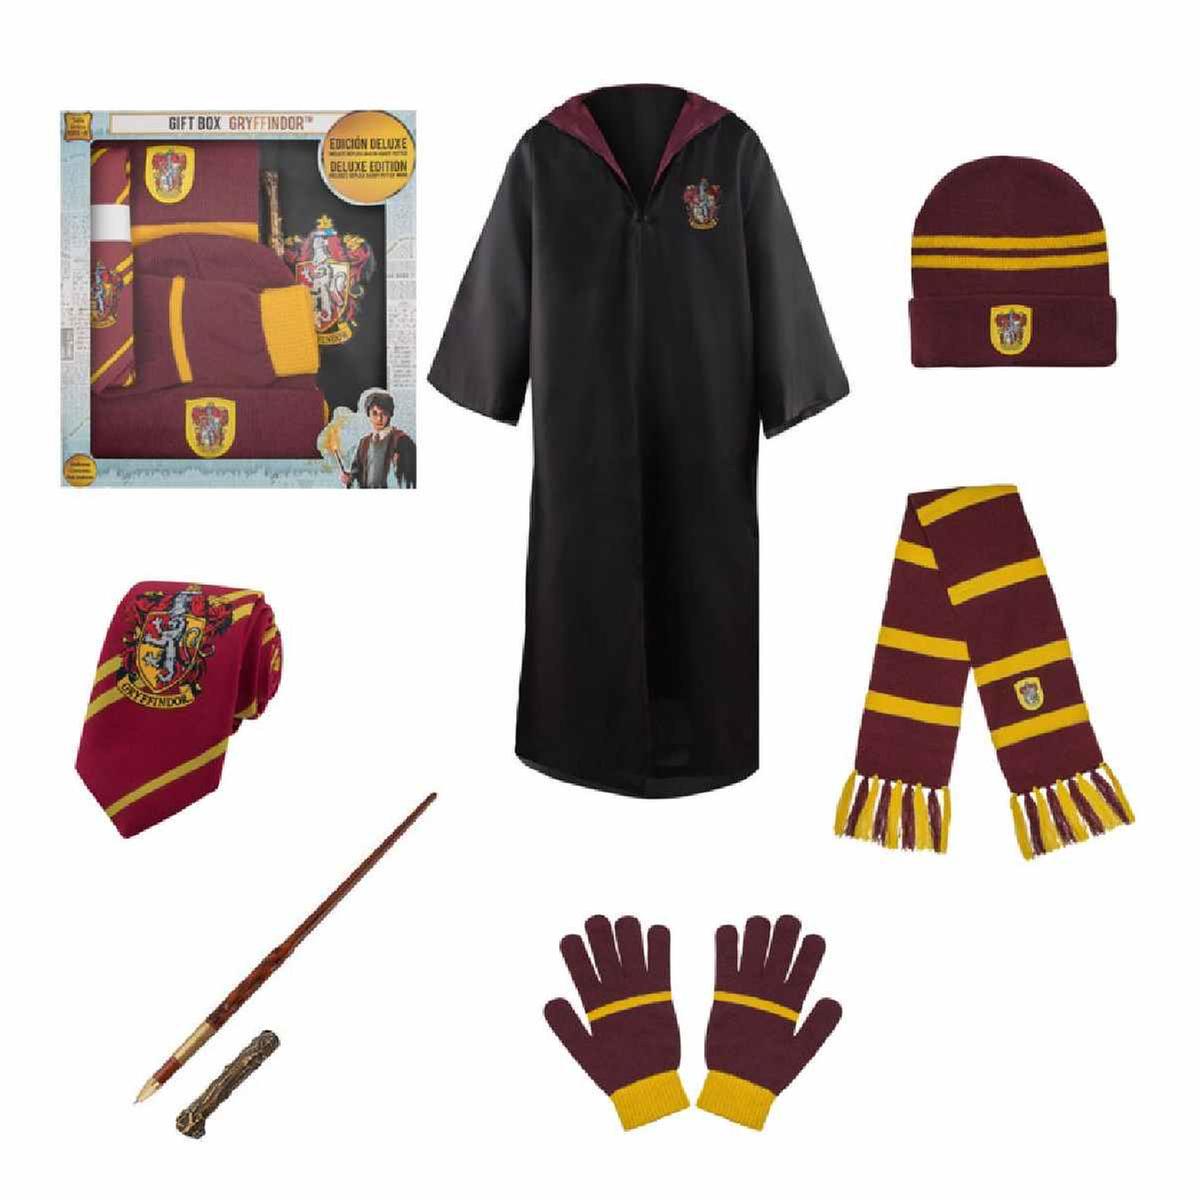 Harry Potter - Uniforme Gryffindor deluxe | Merchandising | Toys"R"Us España